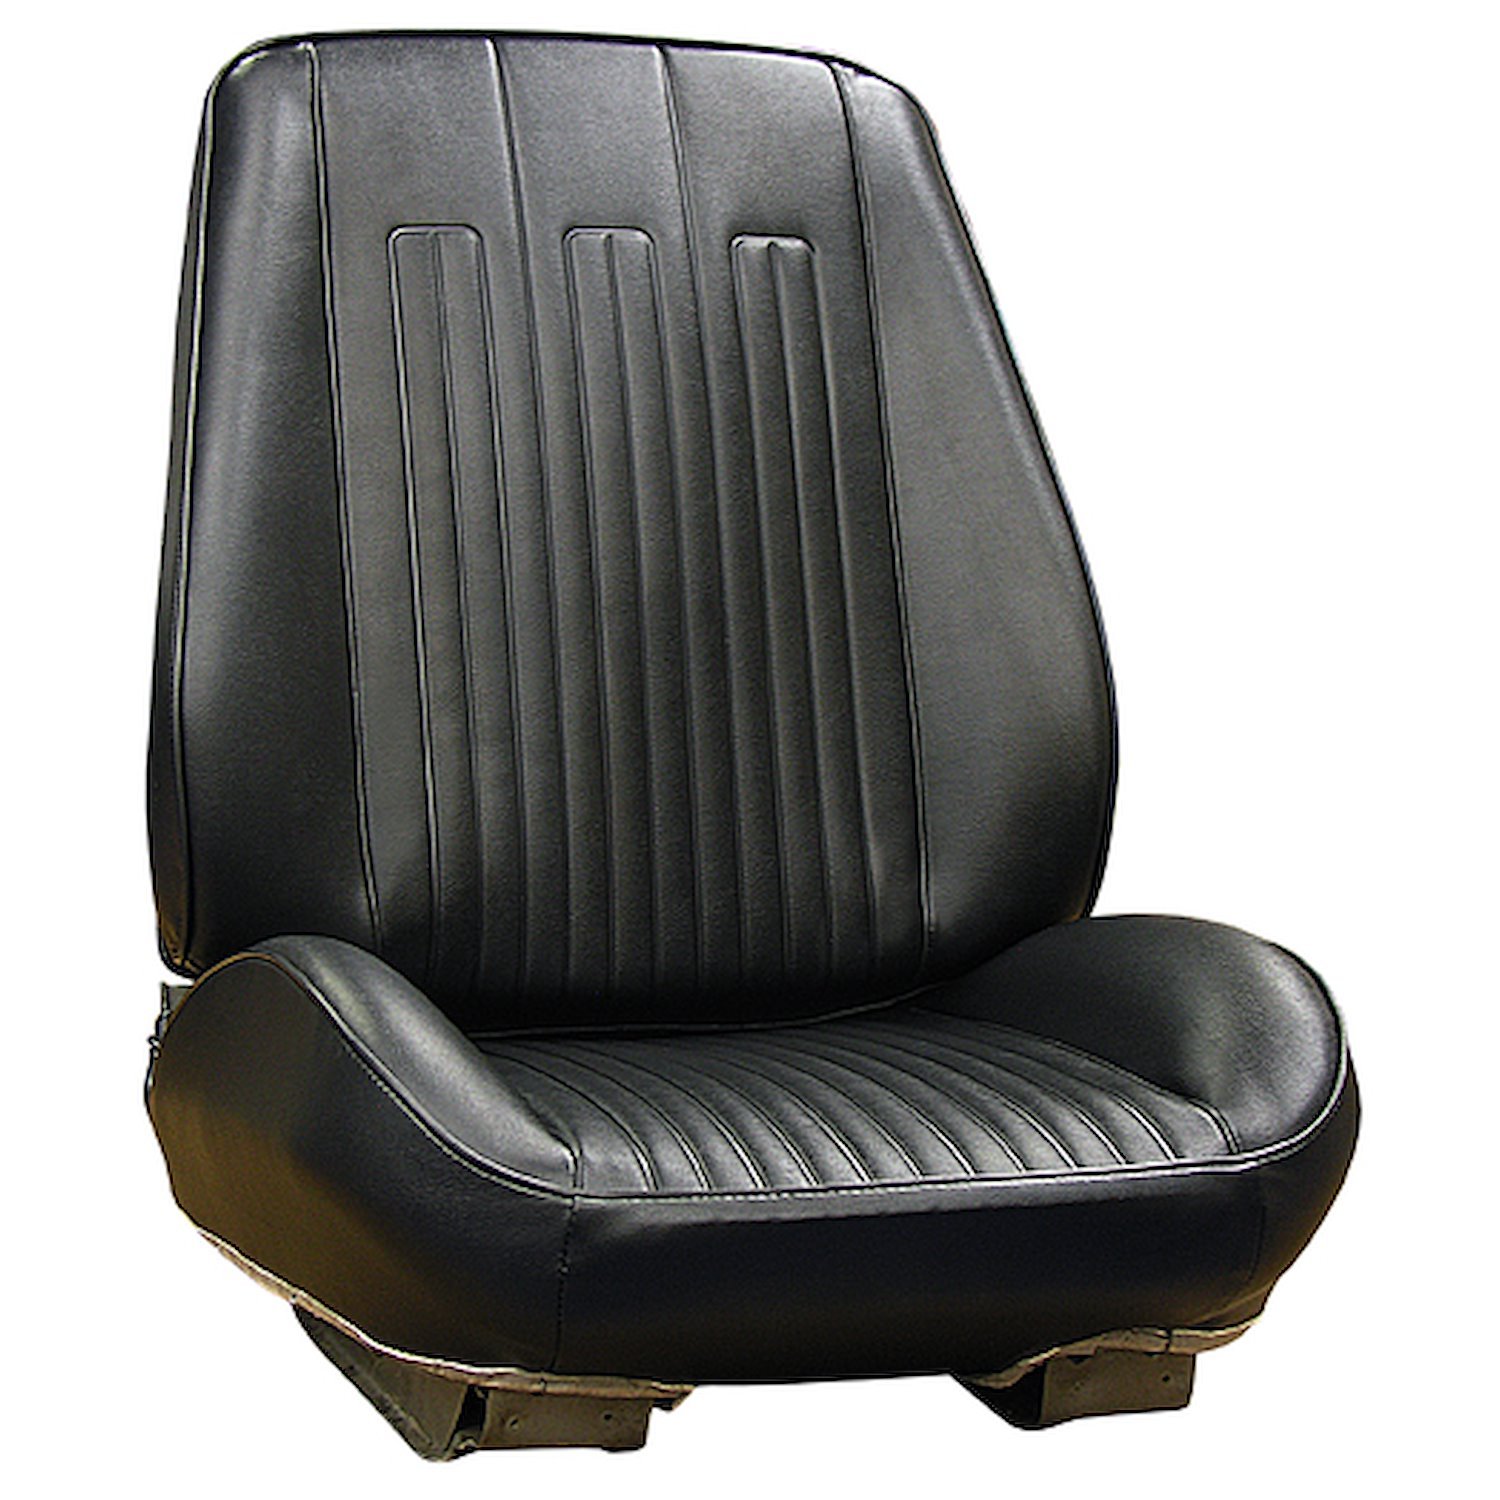 RS68GG00010100G 68 GTO/LEMANS BUCKETS - BLACK RALLYE BUCKET SEATS - BLACK